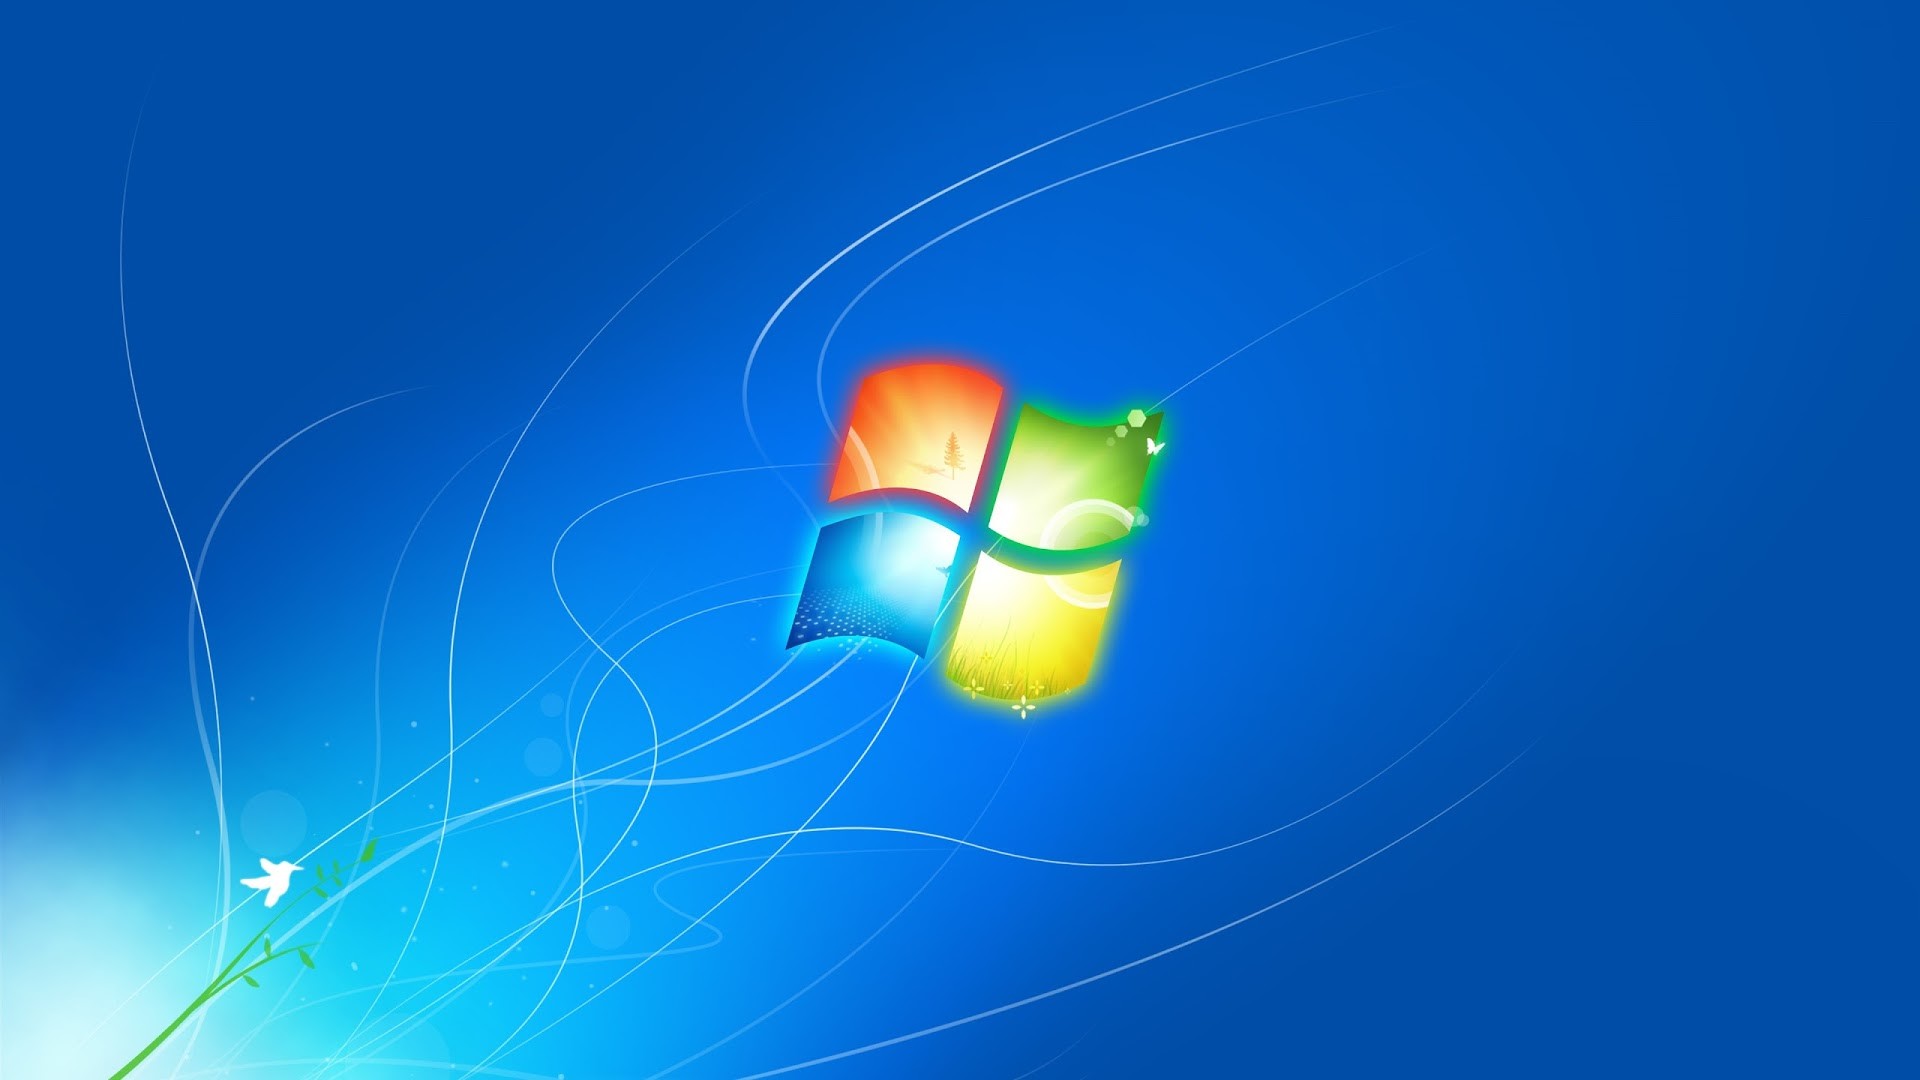 Windows 7 Wallpaper 1366x768 ①